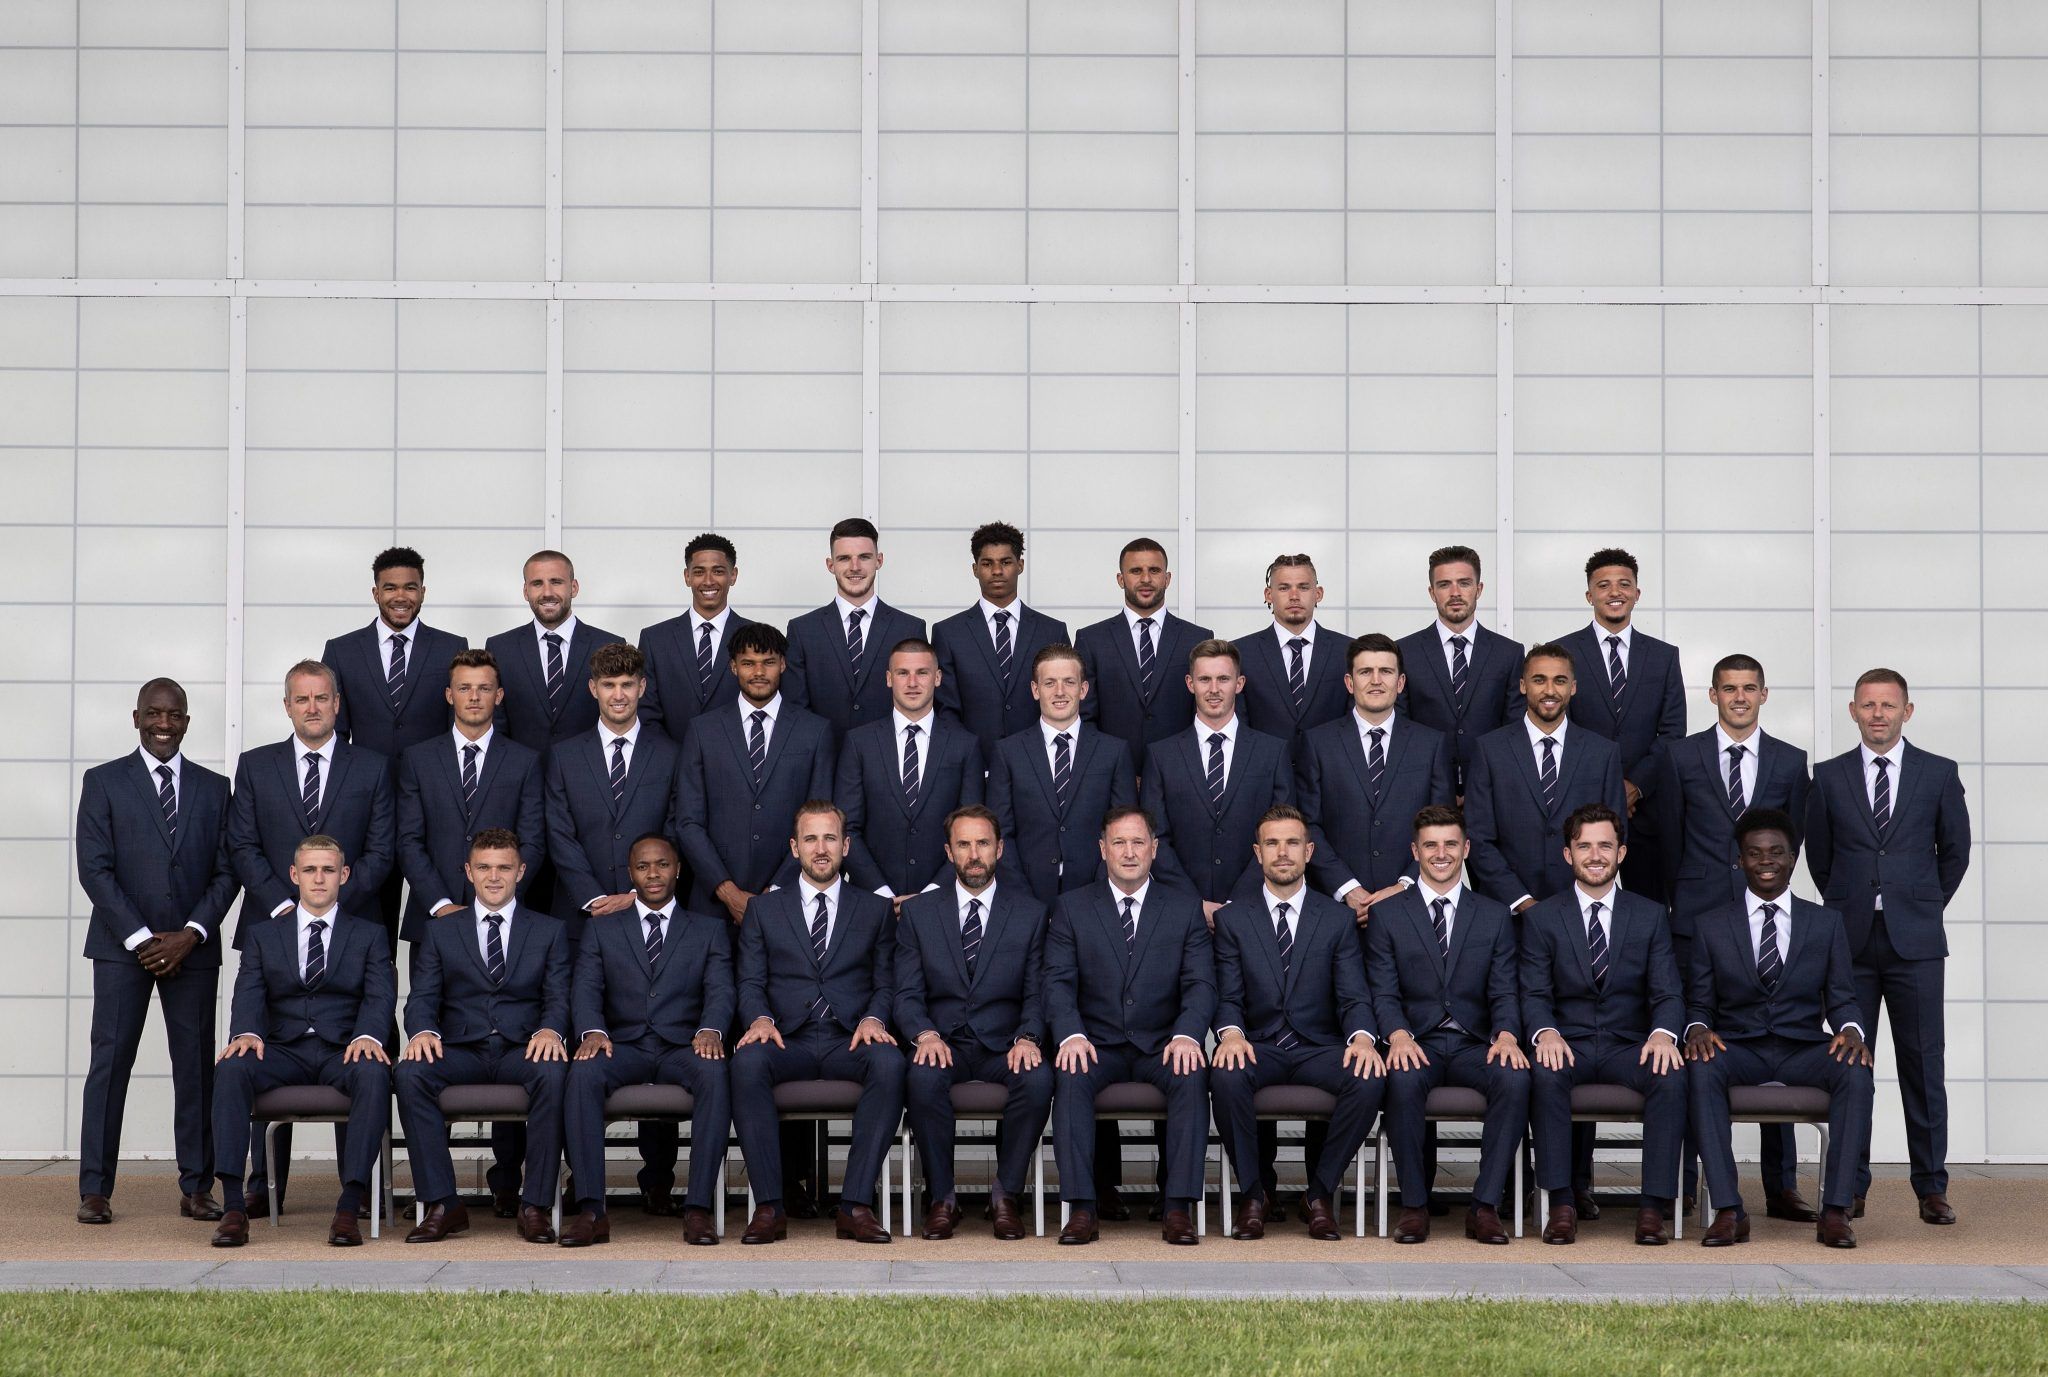 Team photo of the full Euro 2020 England squad